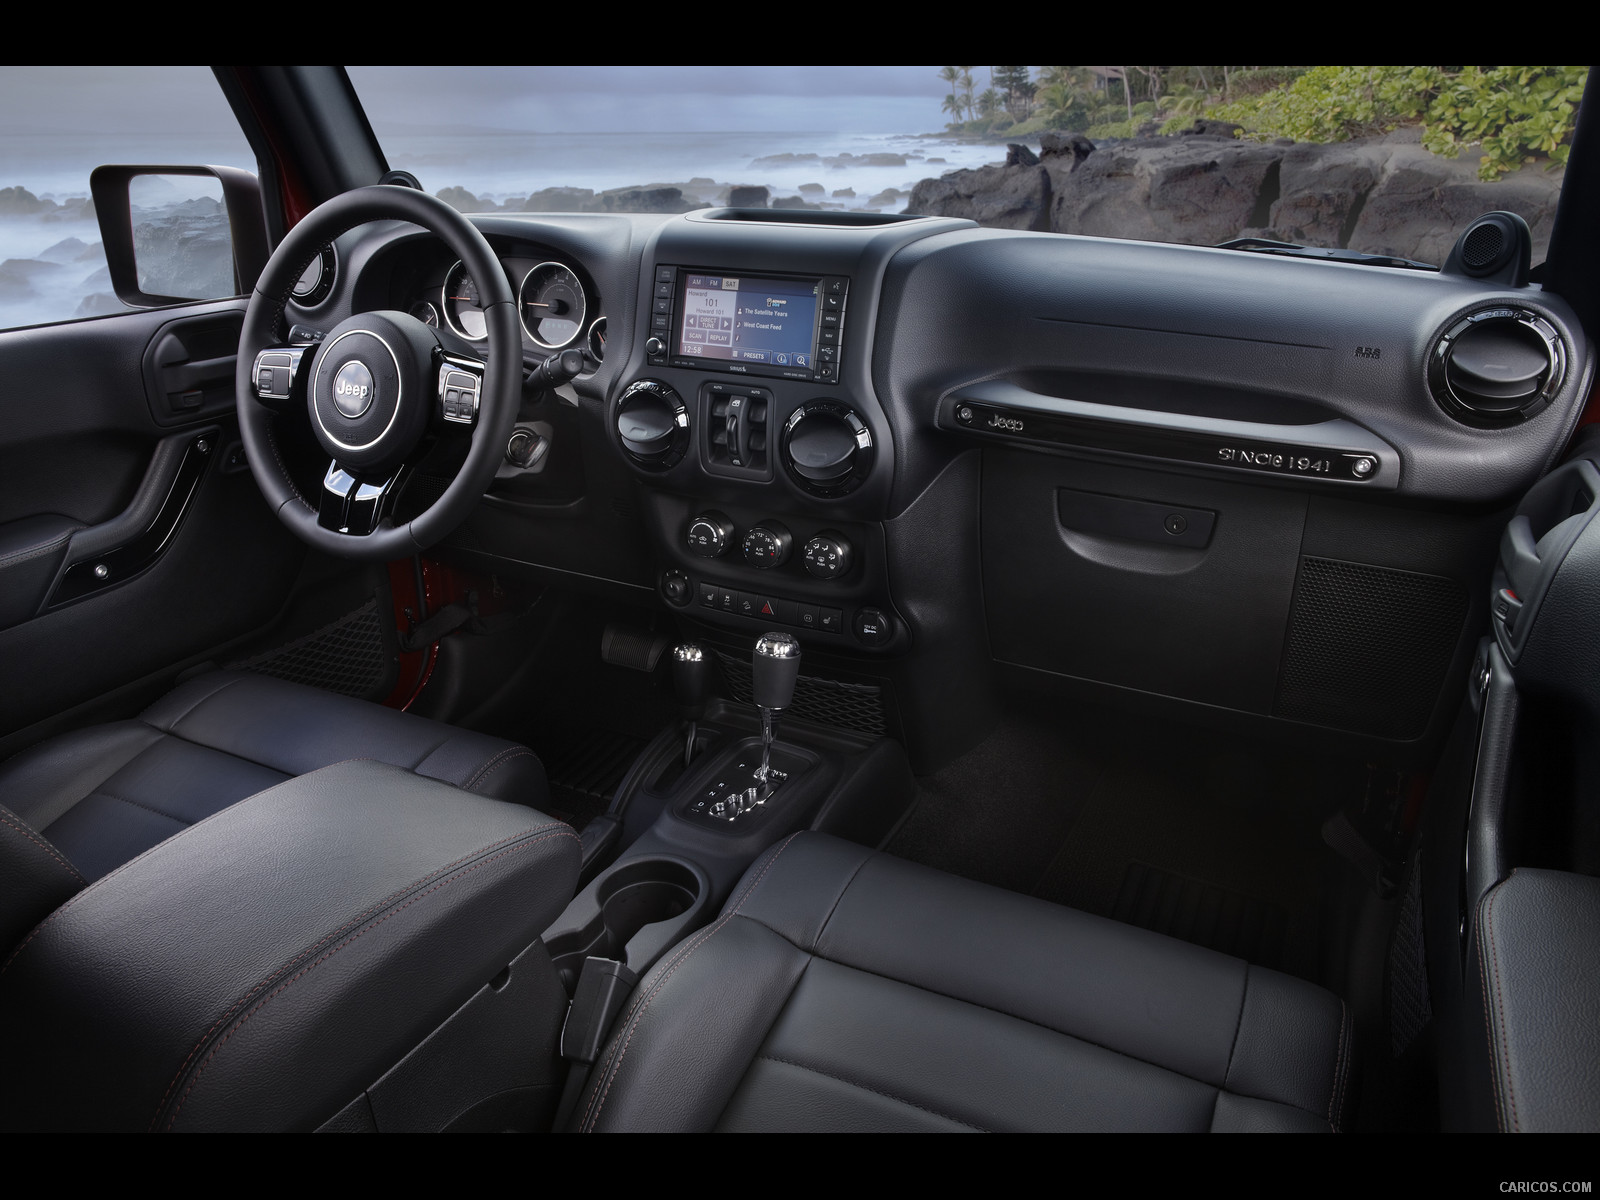 Jeep Wrangler 2013 Interior